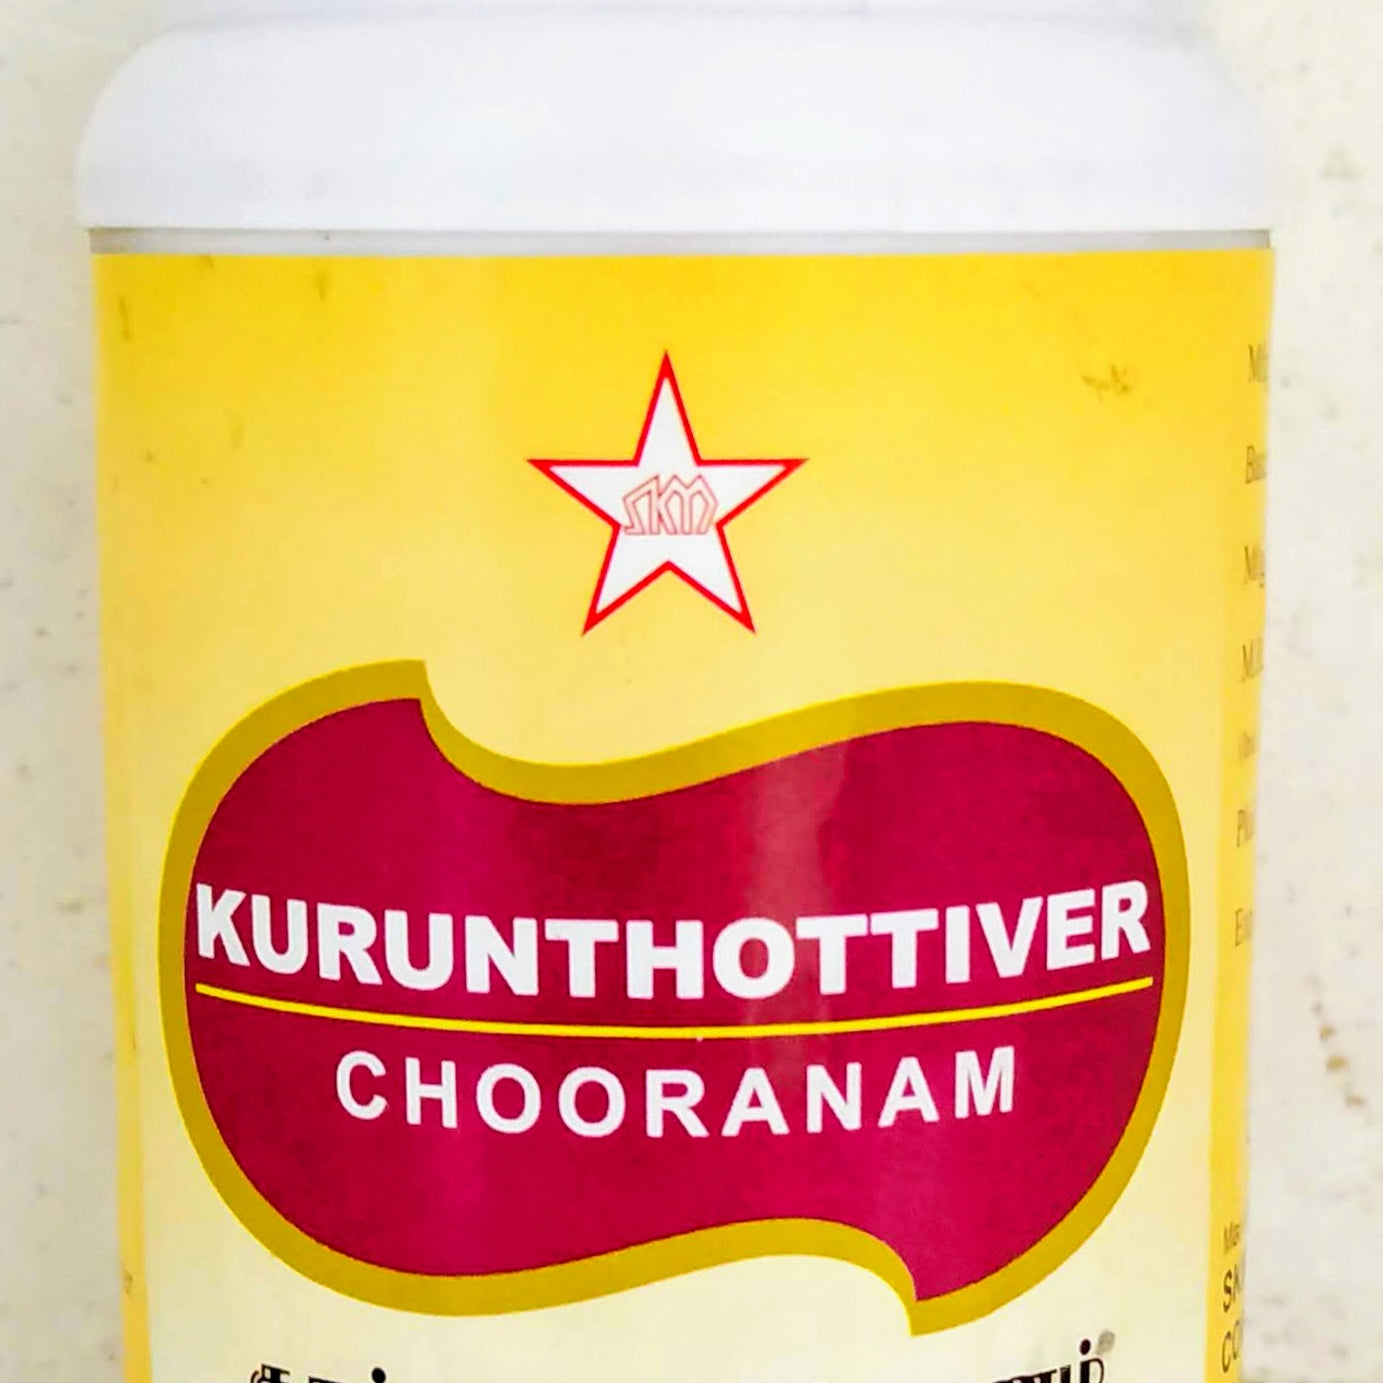 Shop Kurunthottiver Chooranam 100gm at price 260.00 from SKM Online - Ayush Care